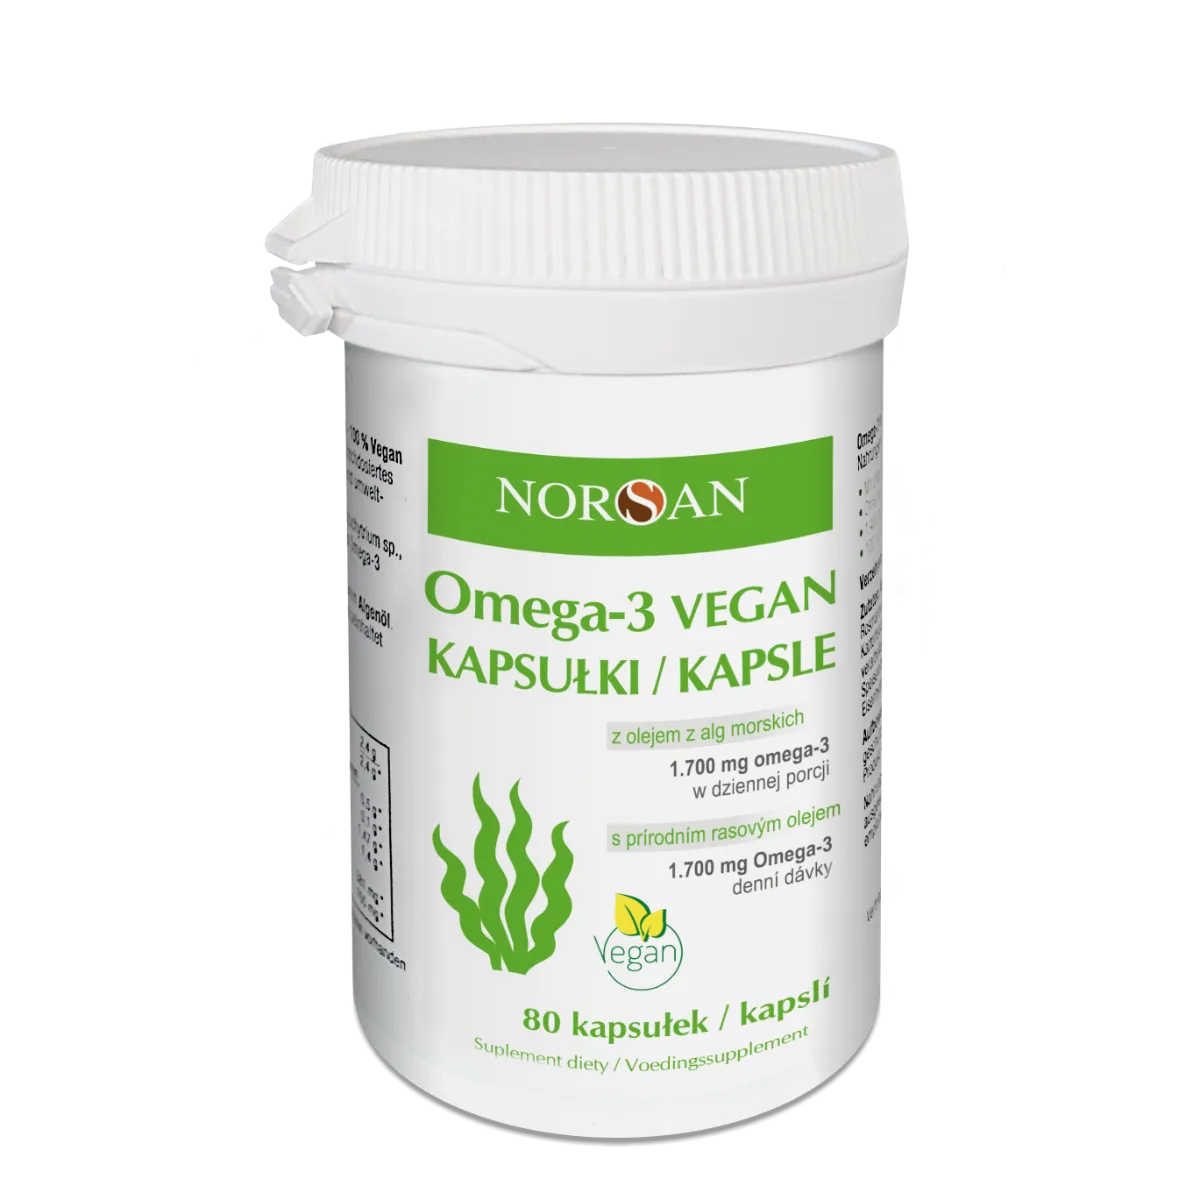 Norsan Omega-3 Vegan Kapsułki, 80 kapsułek 